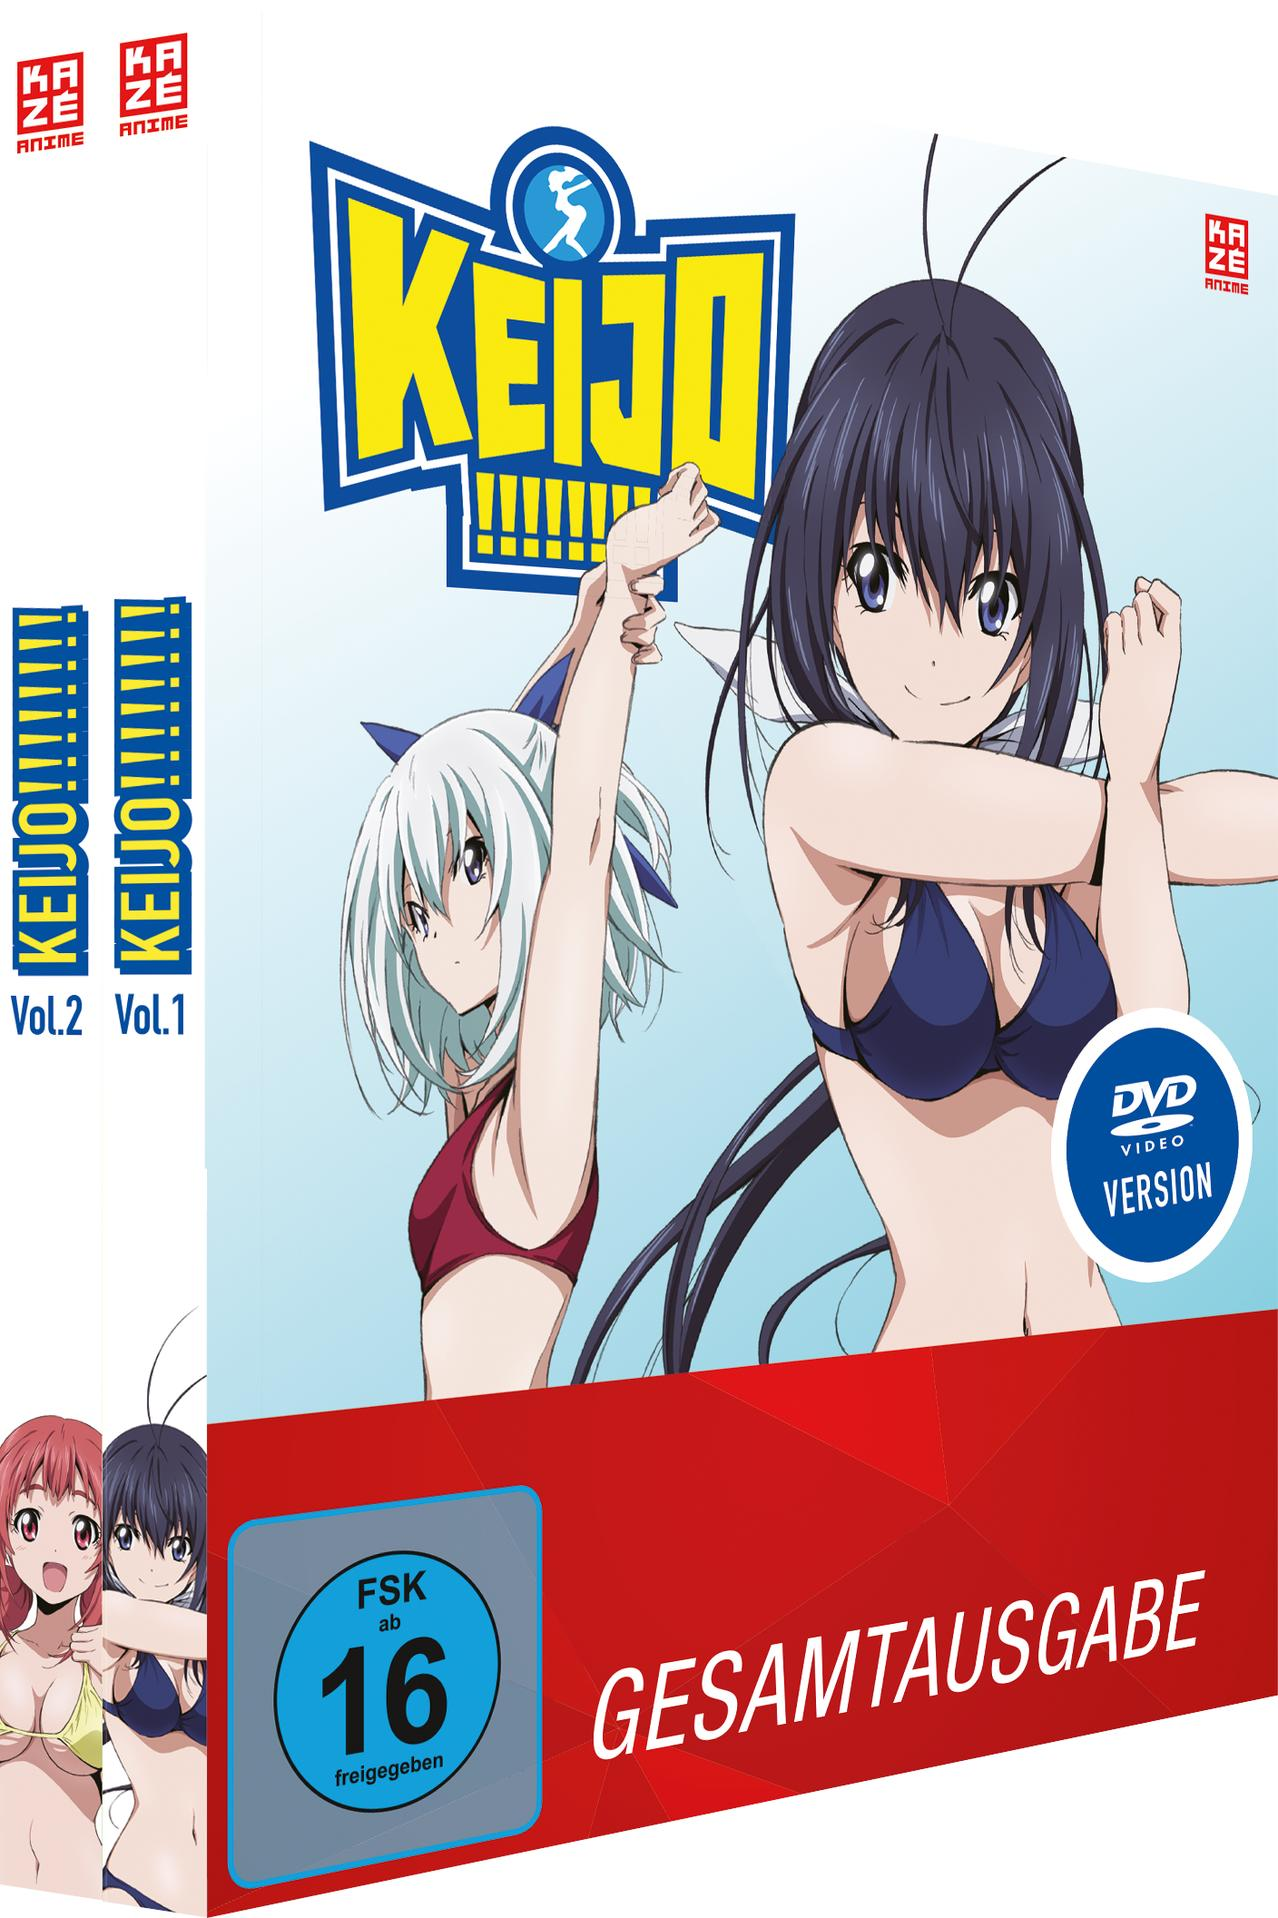 Keijo!!!!!!!! - - Vol.1-2 DVD - Gesamtausgabe Bundle